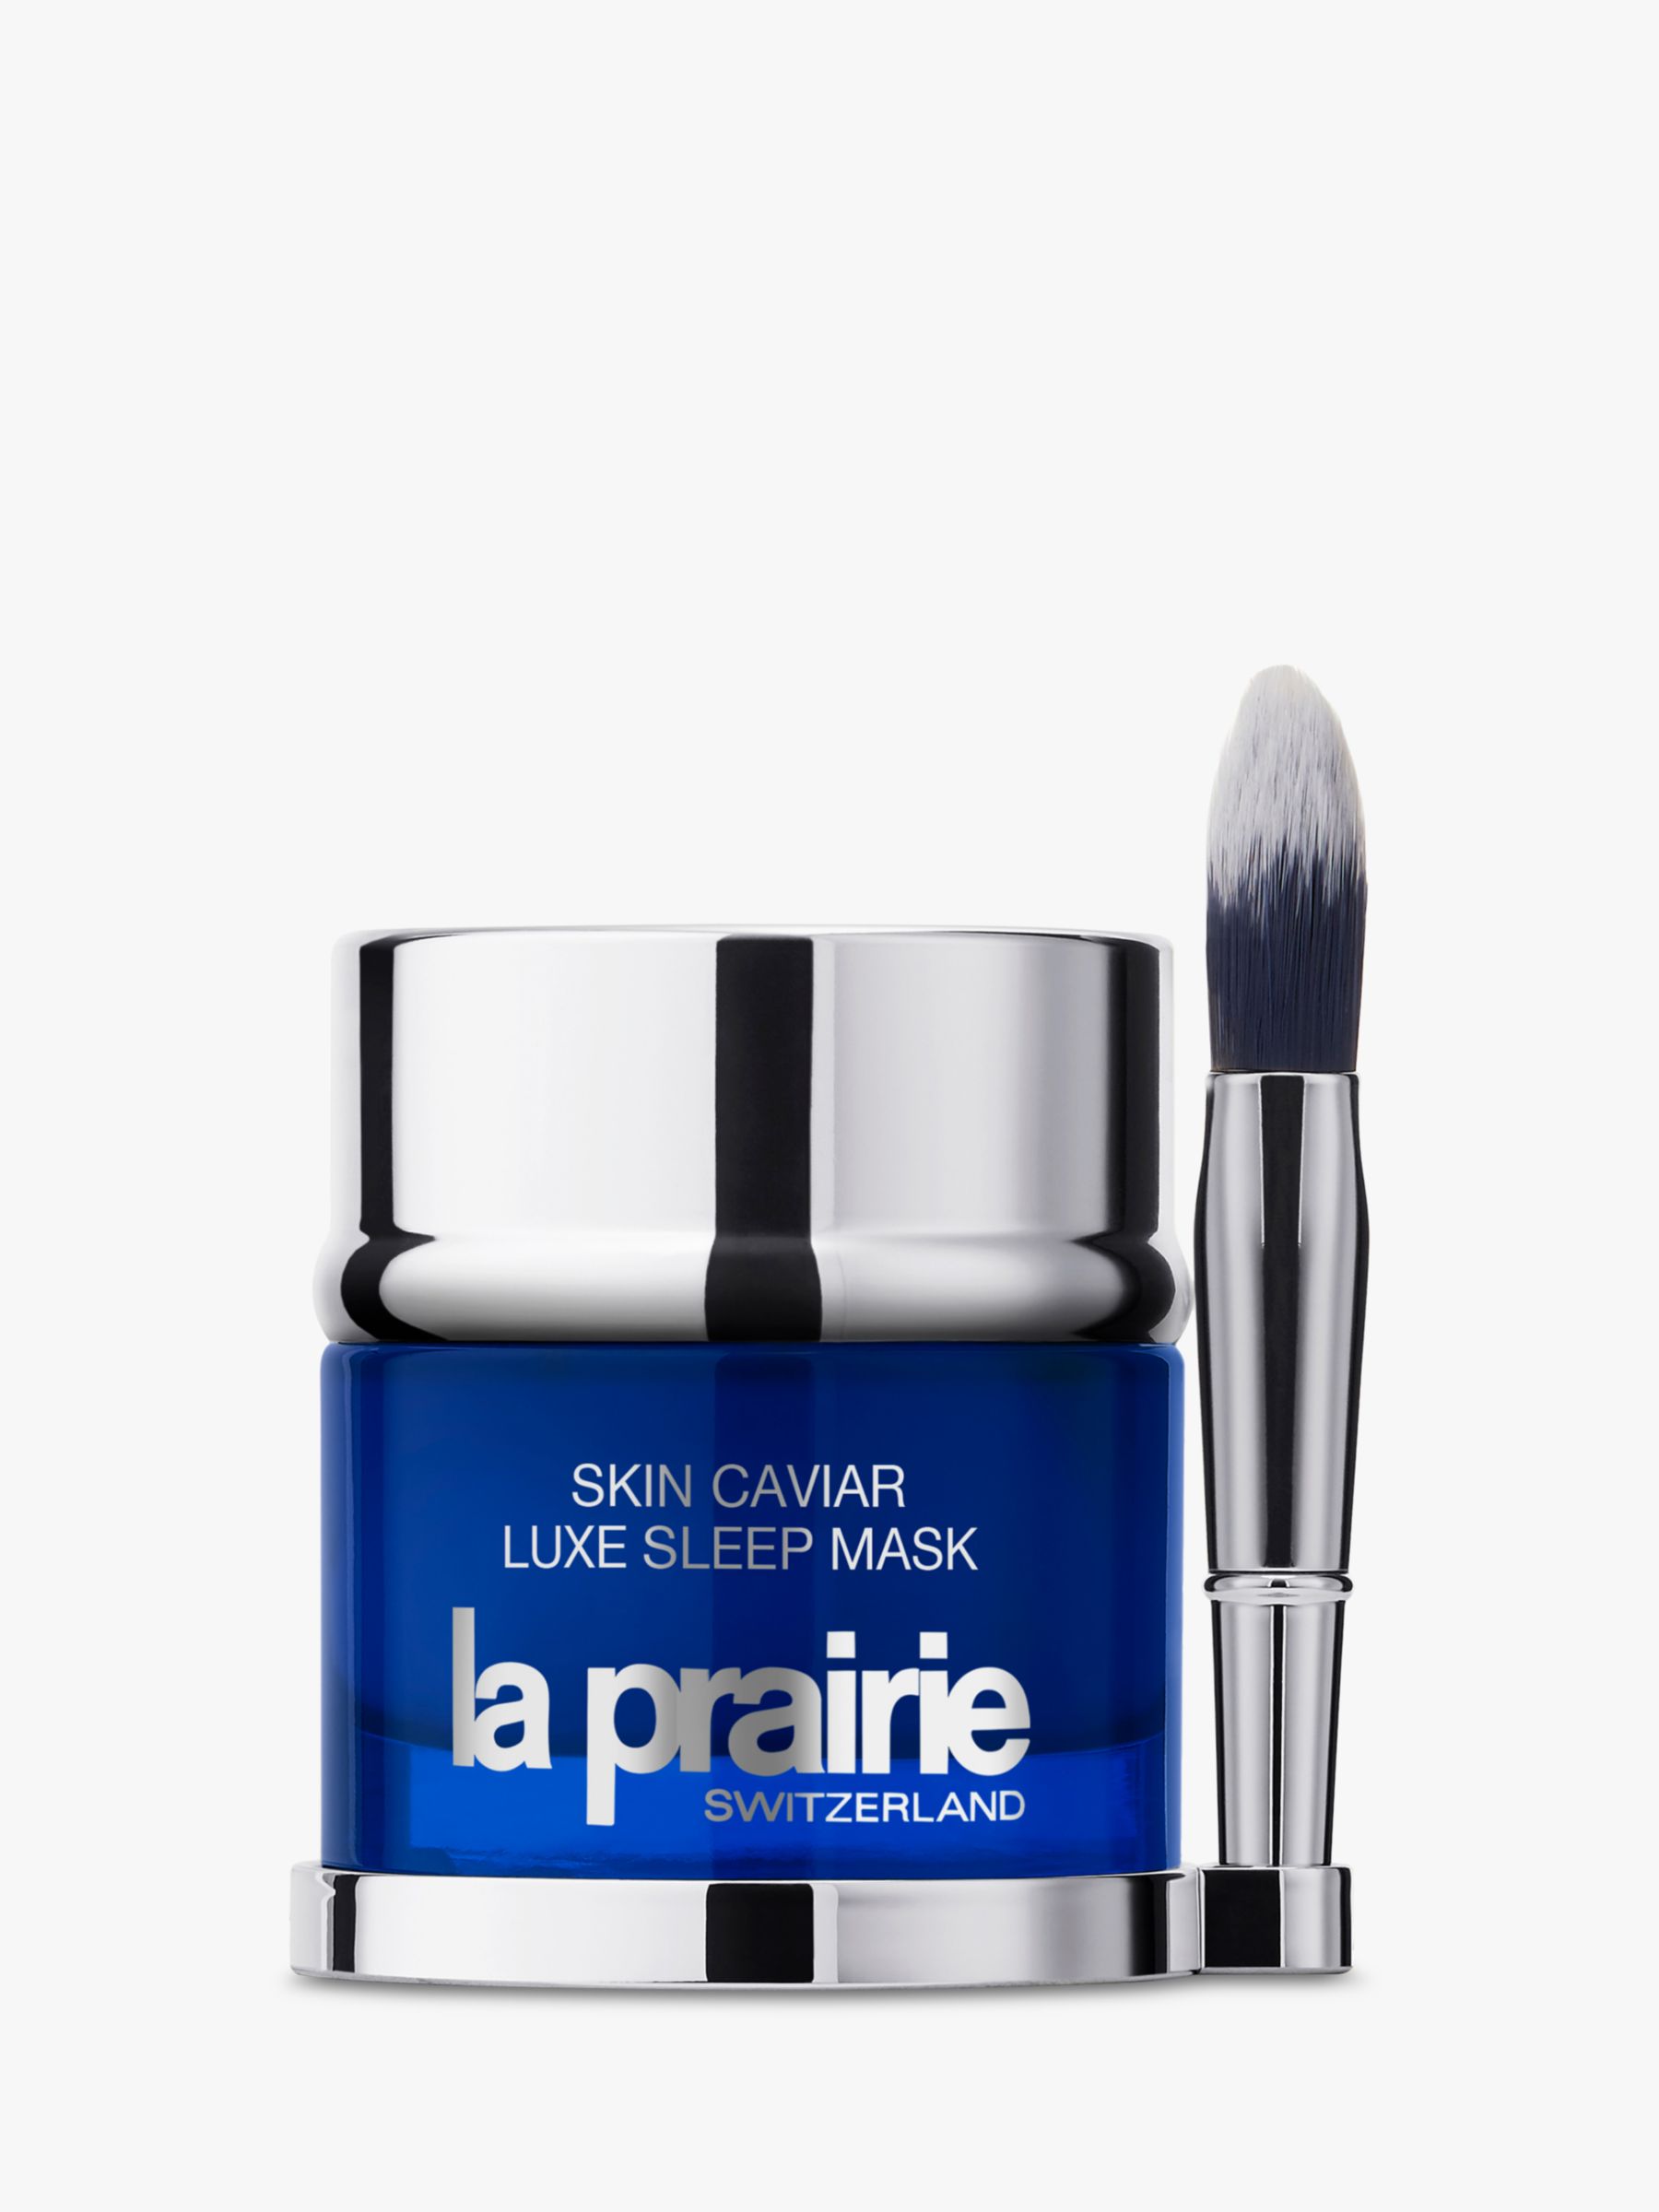 La Prairie Skin Caviar Luxe Sleep Mask, 50ml 1